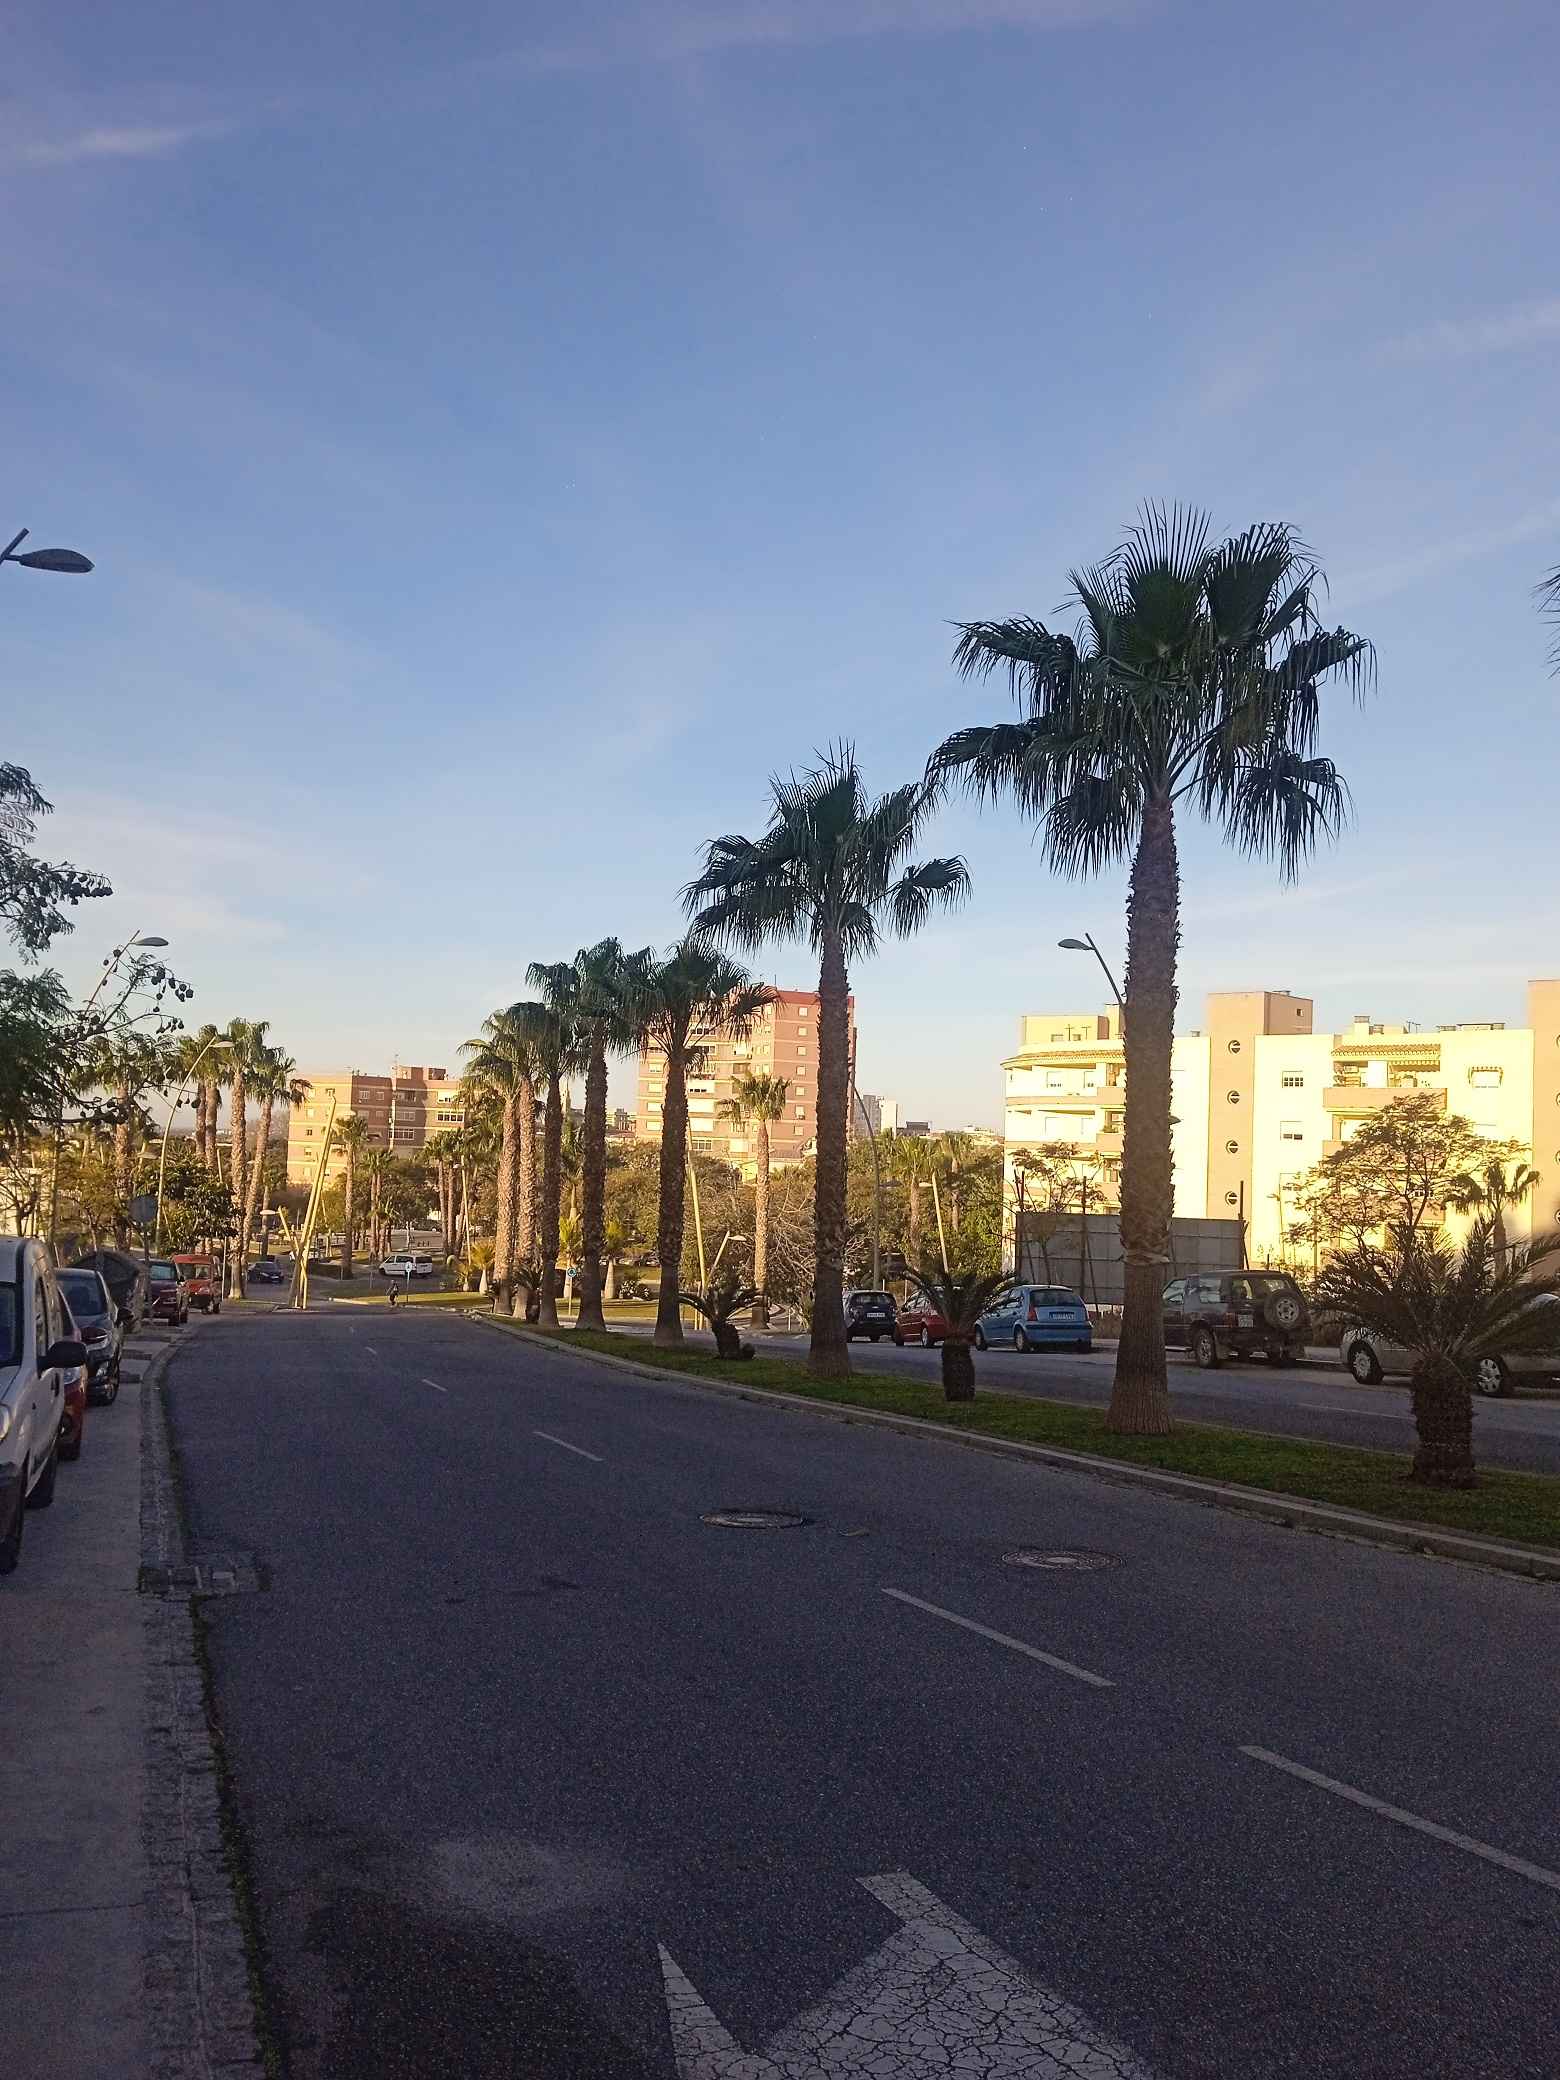 Carretera urbana con palmeras